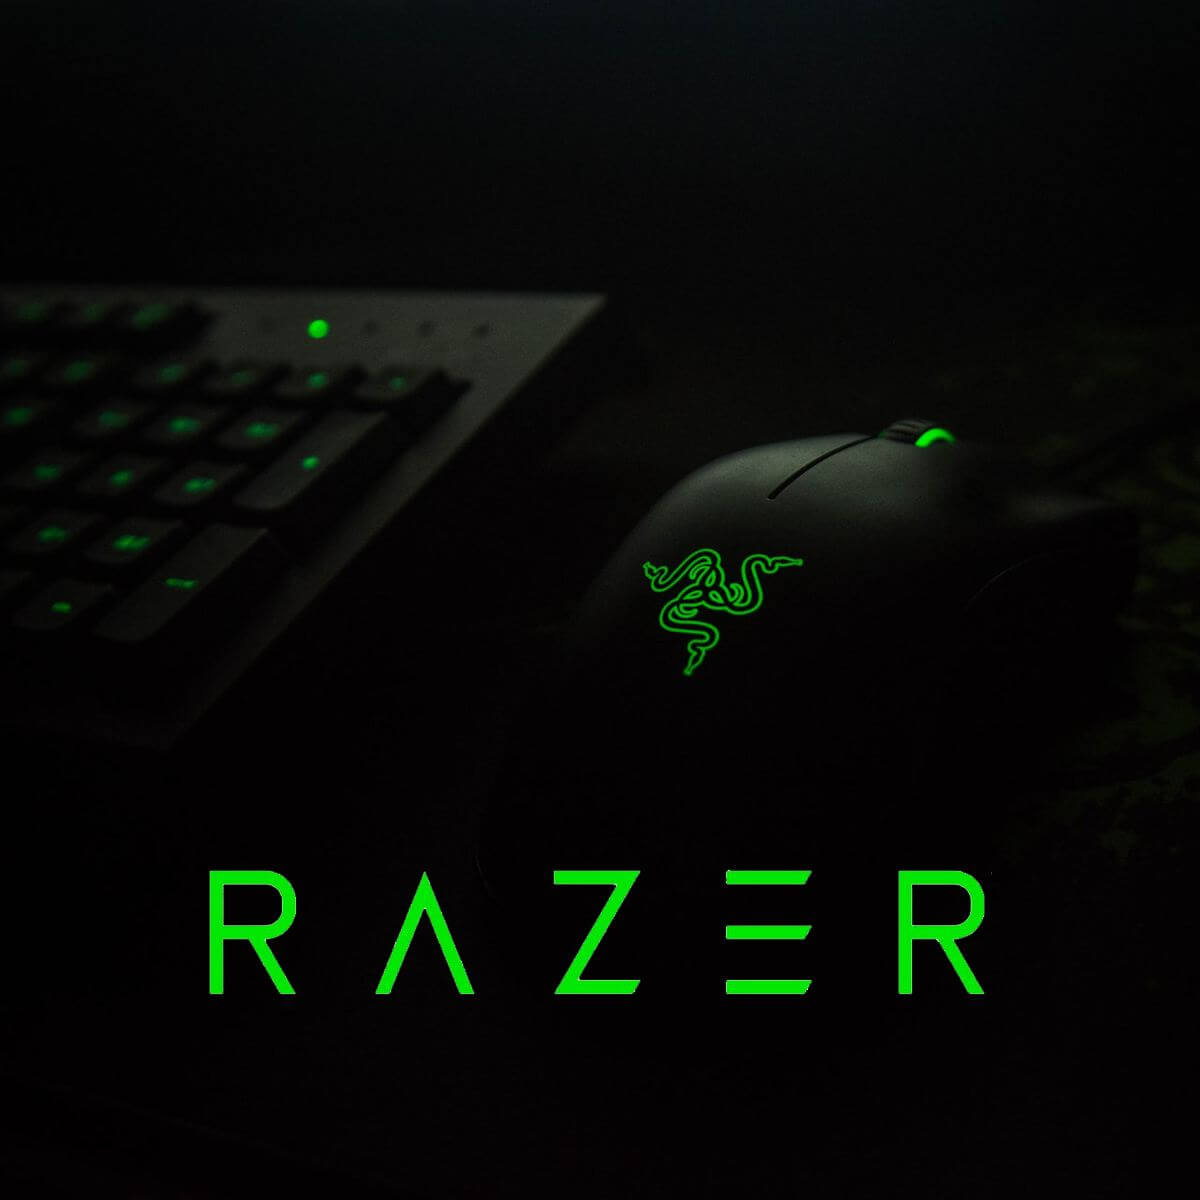 Razer Mouse Driver Proper Installation Guide On Windows 10